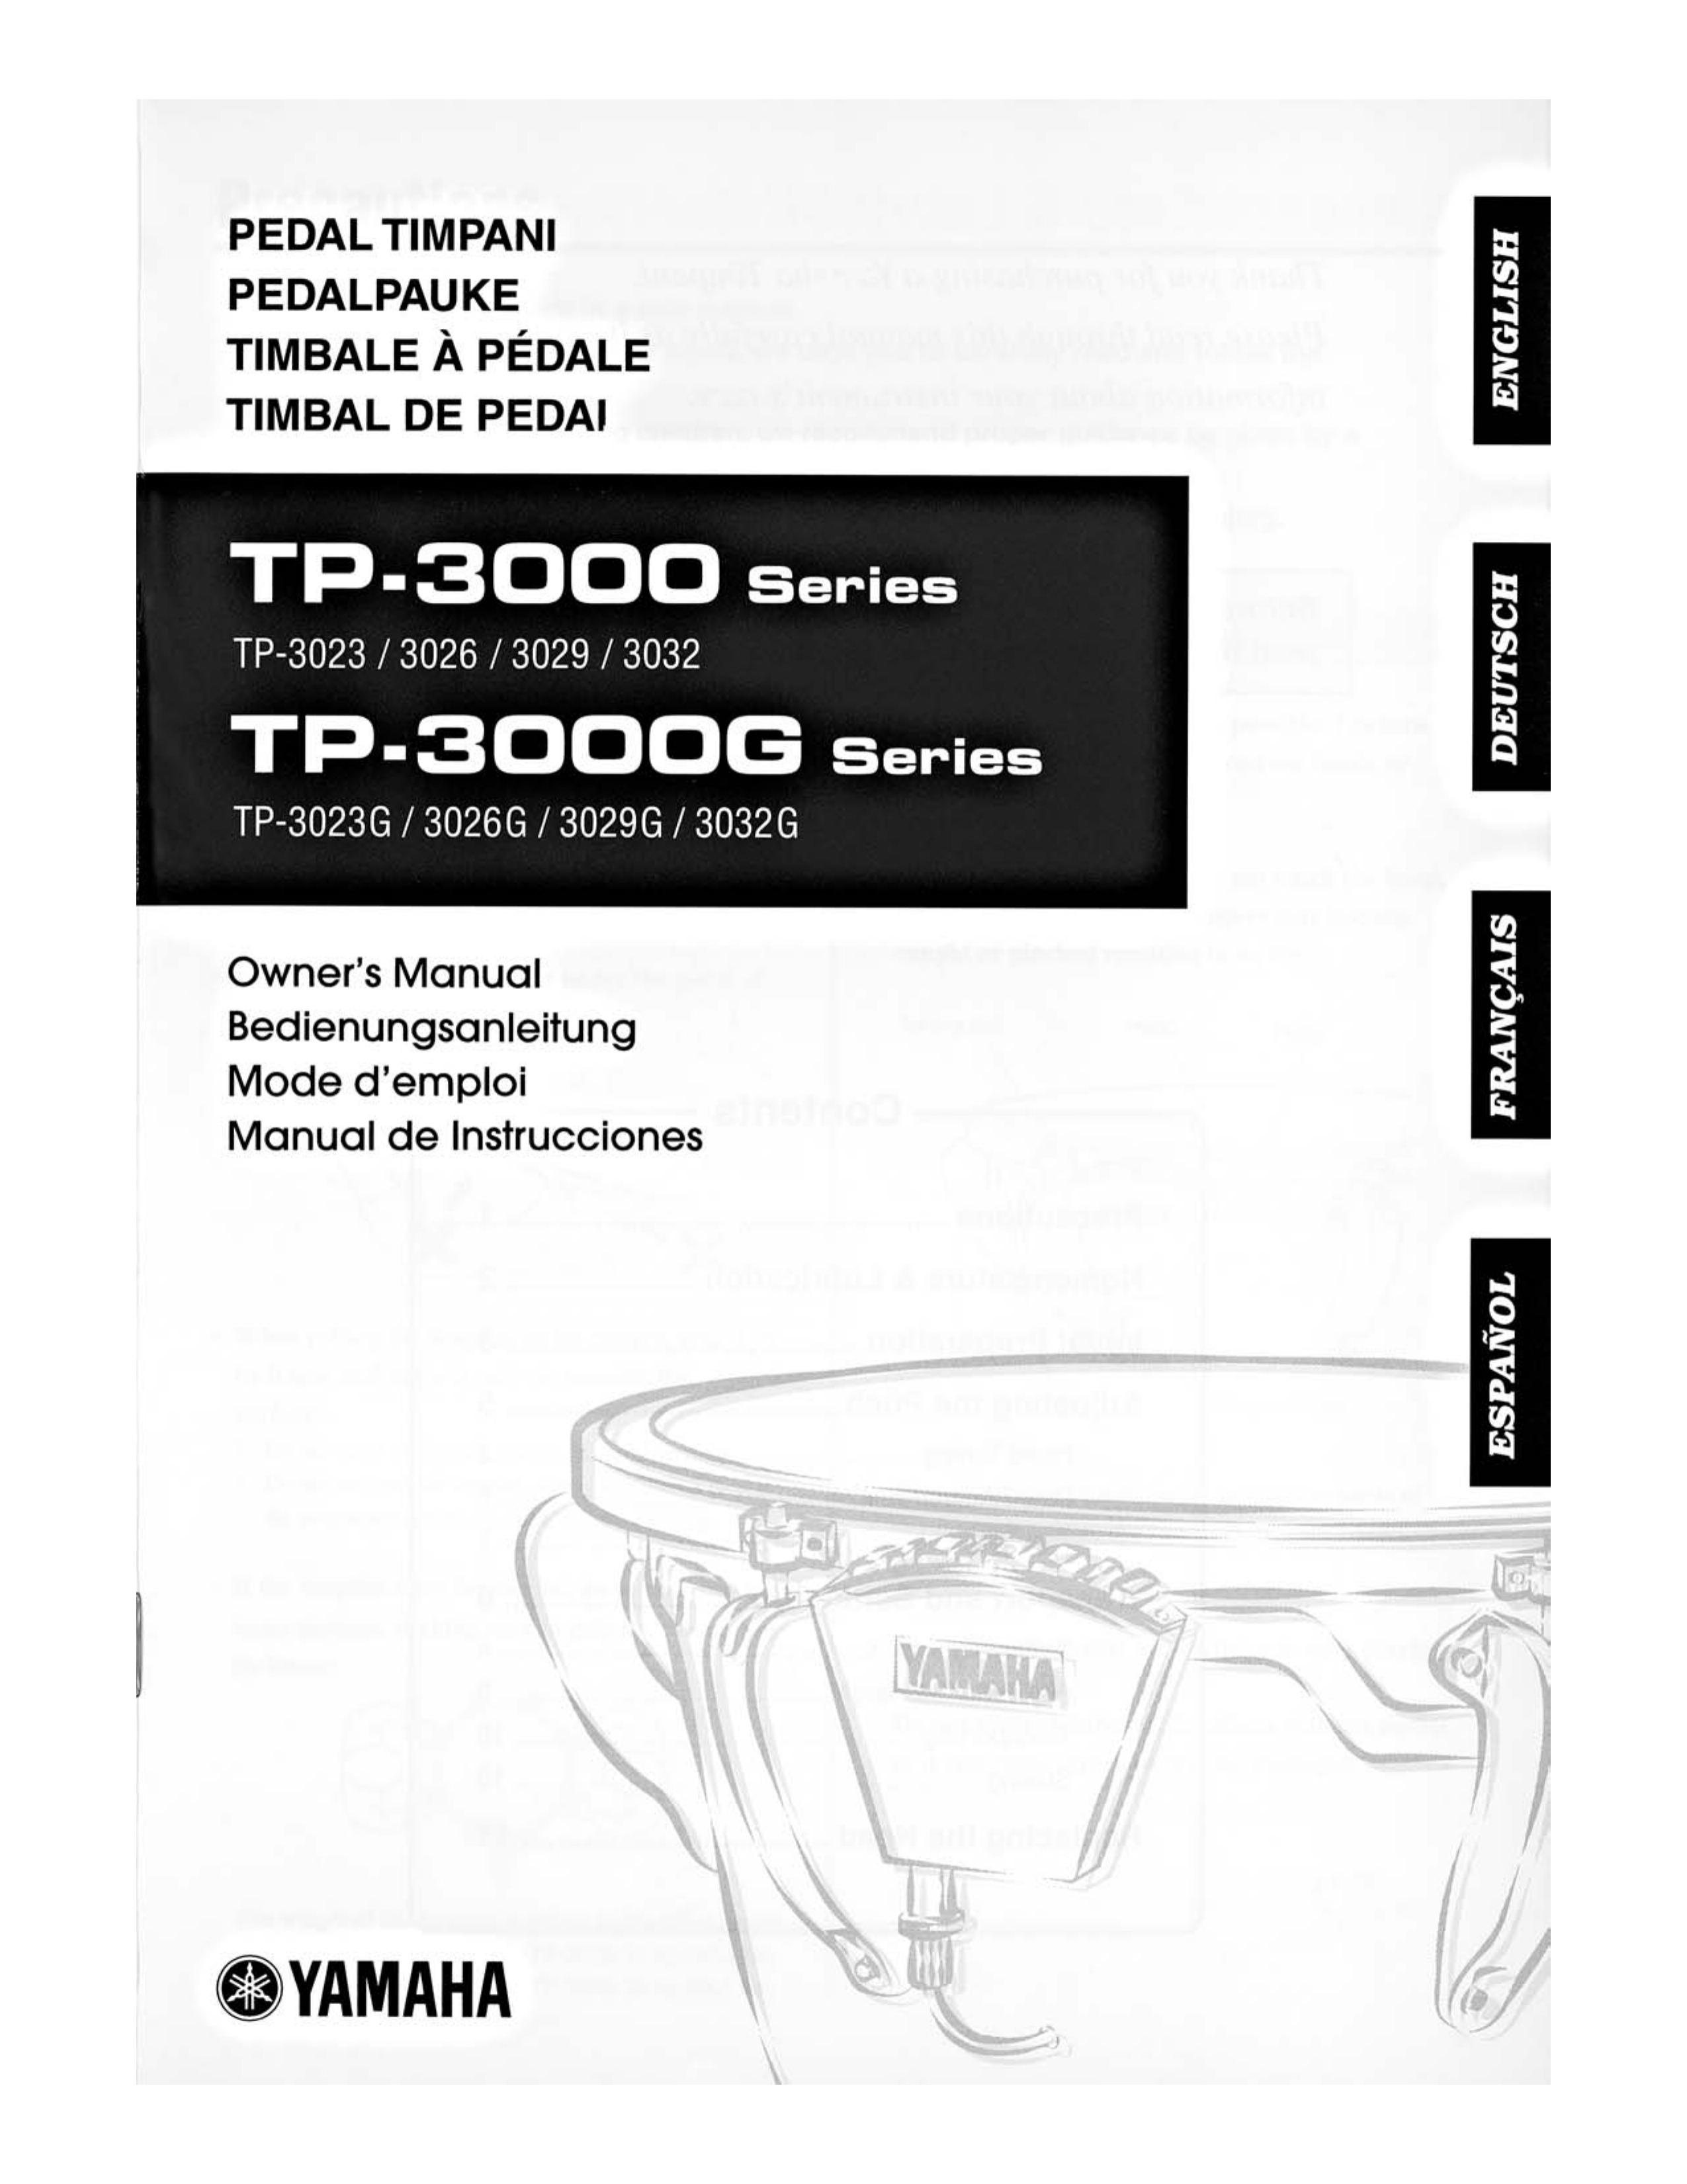 Yamaha Pedal Timpani Music Pedal User Manual